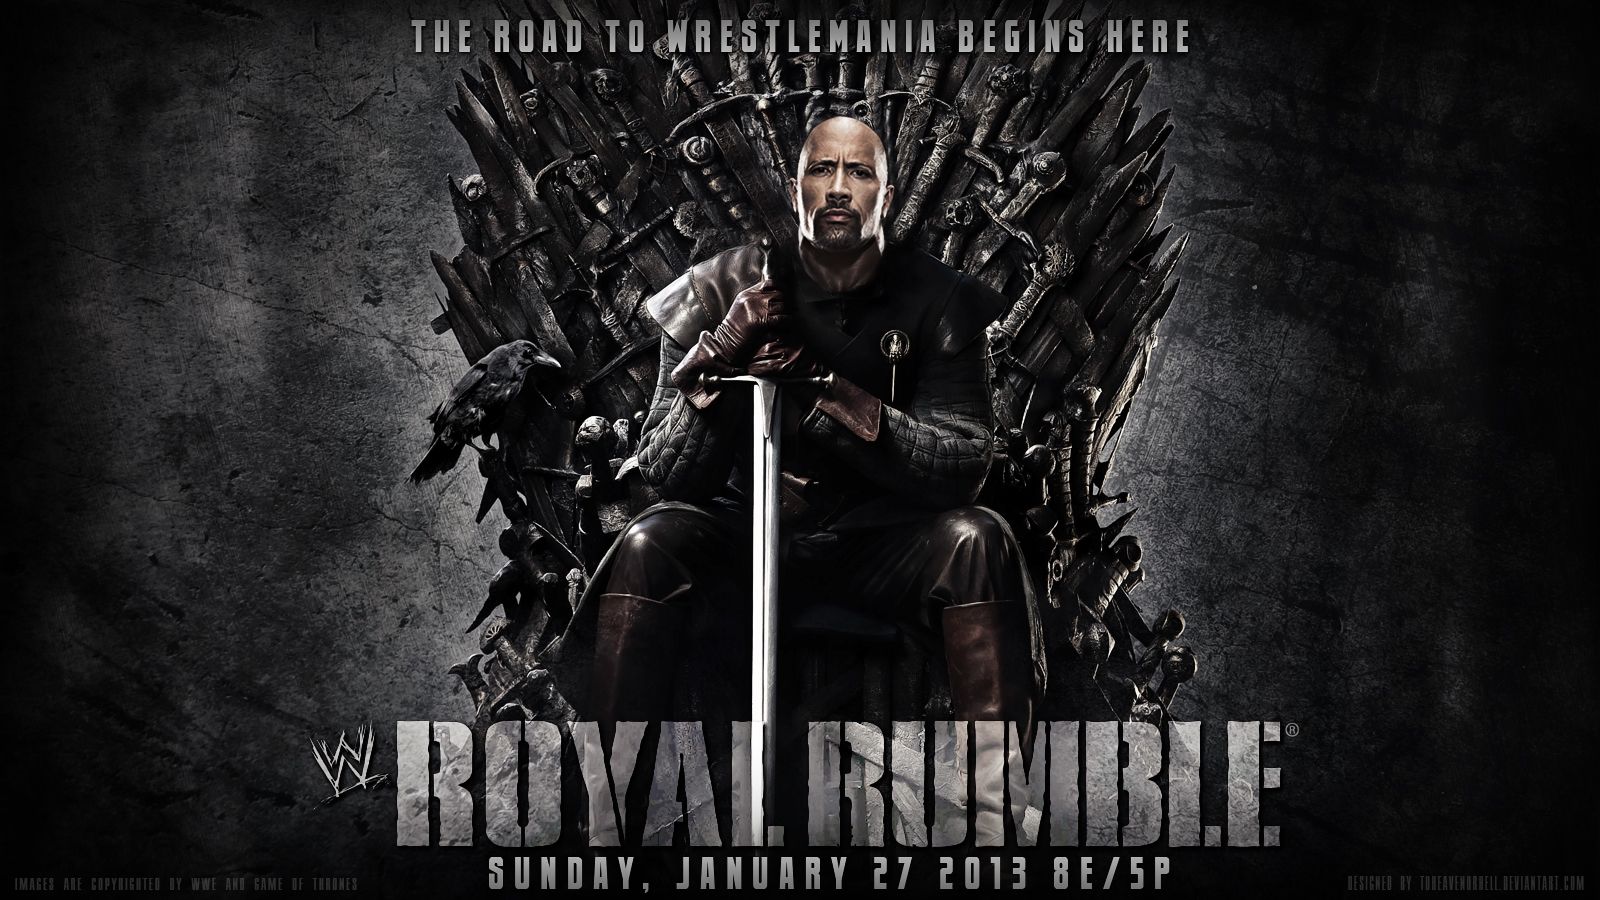 WWE Royal Rumble 2013 Wallpaper The Rock by ToHeavenOrHell on ...